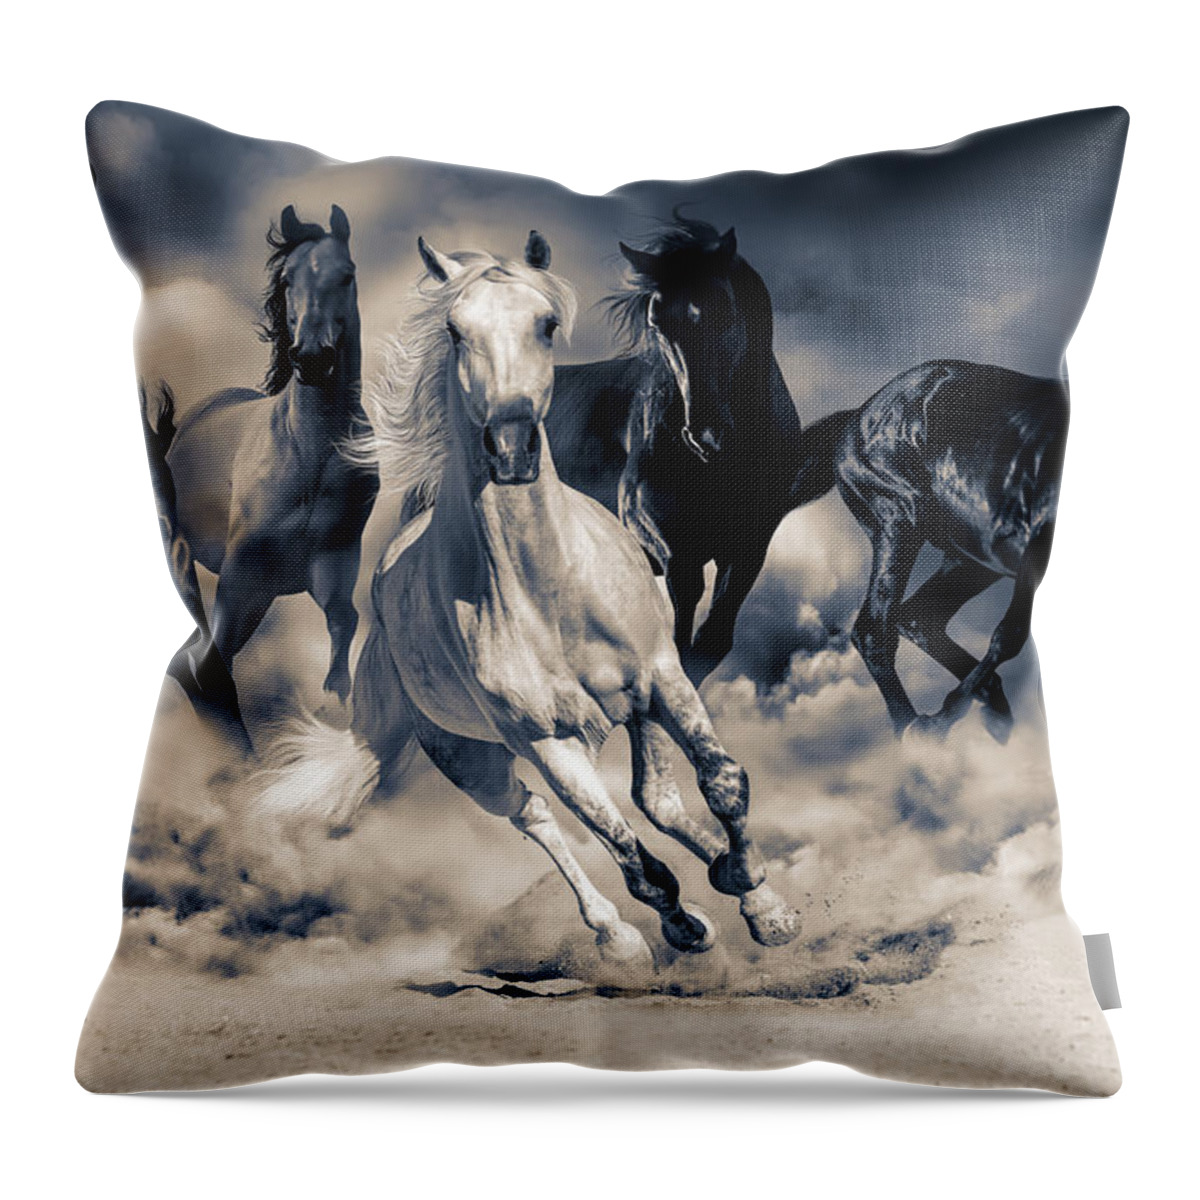 Horses Throw Pillow featuring the digital art Running Horses by Steve Ladner